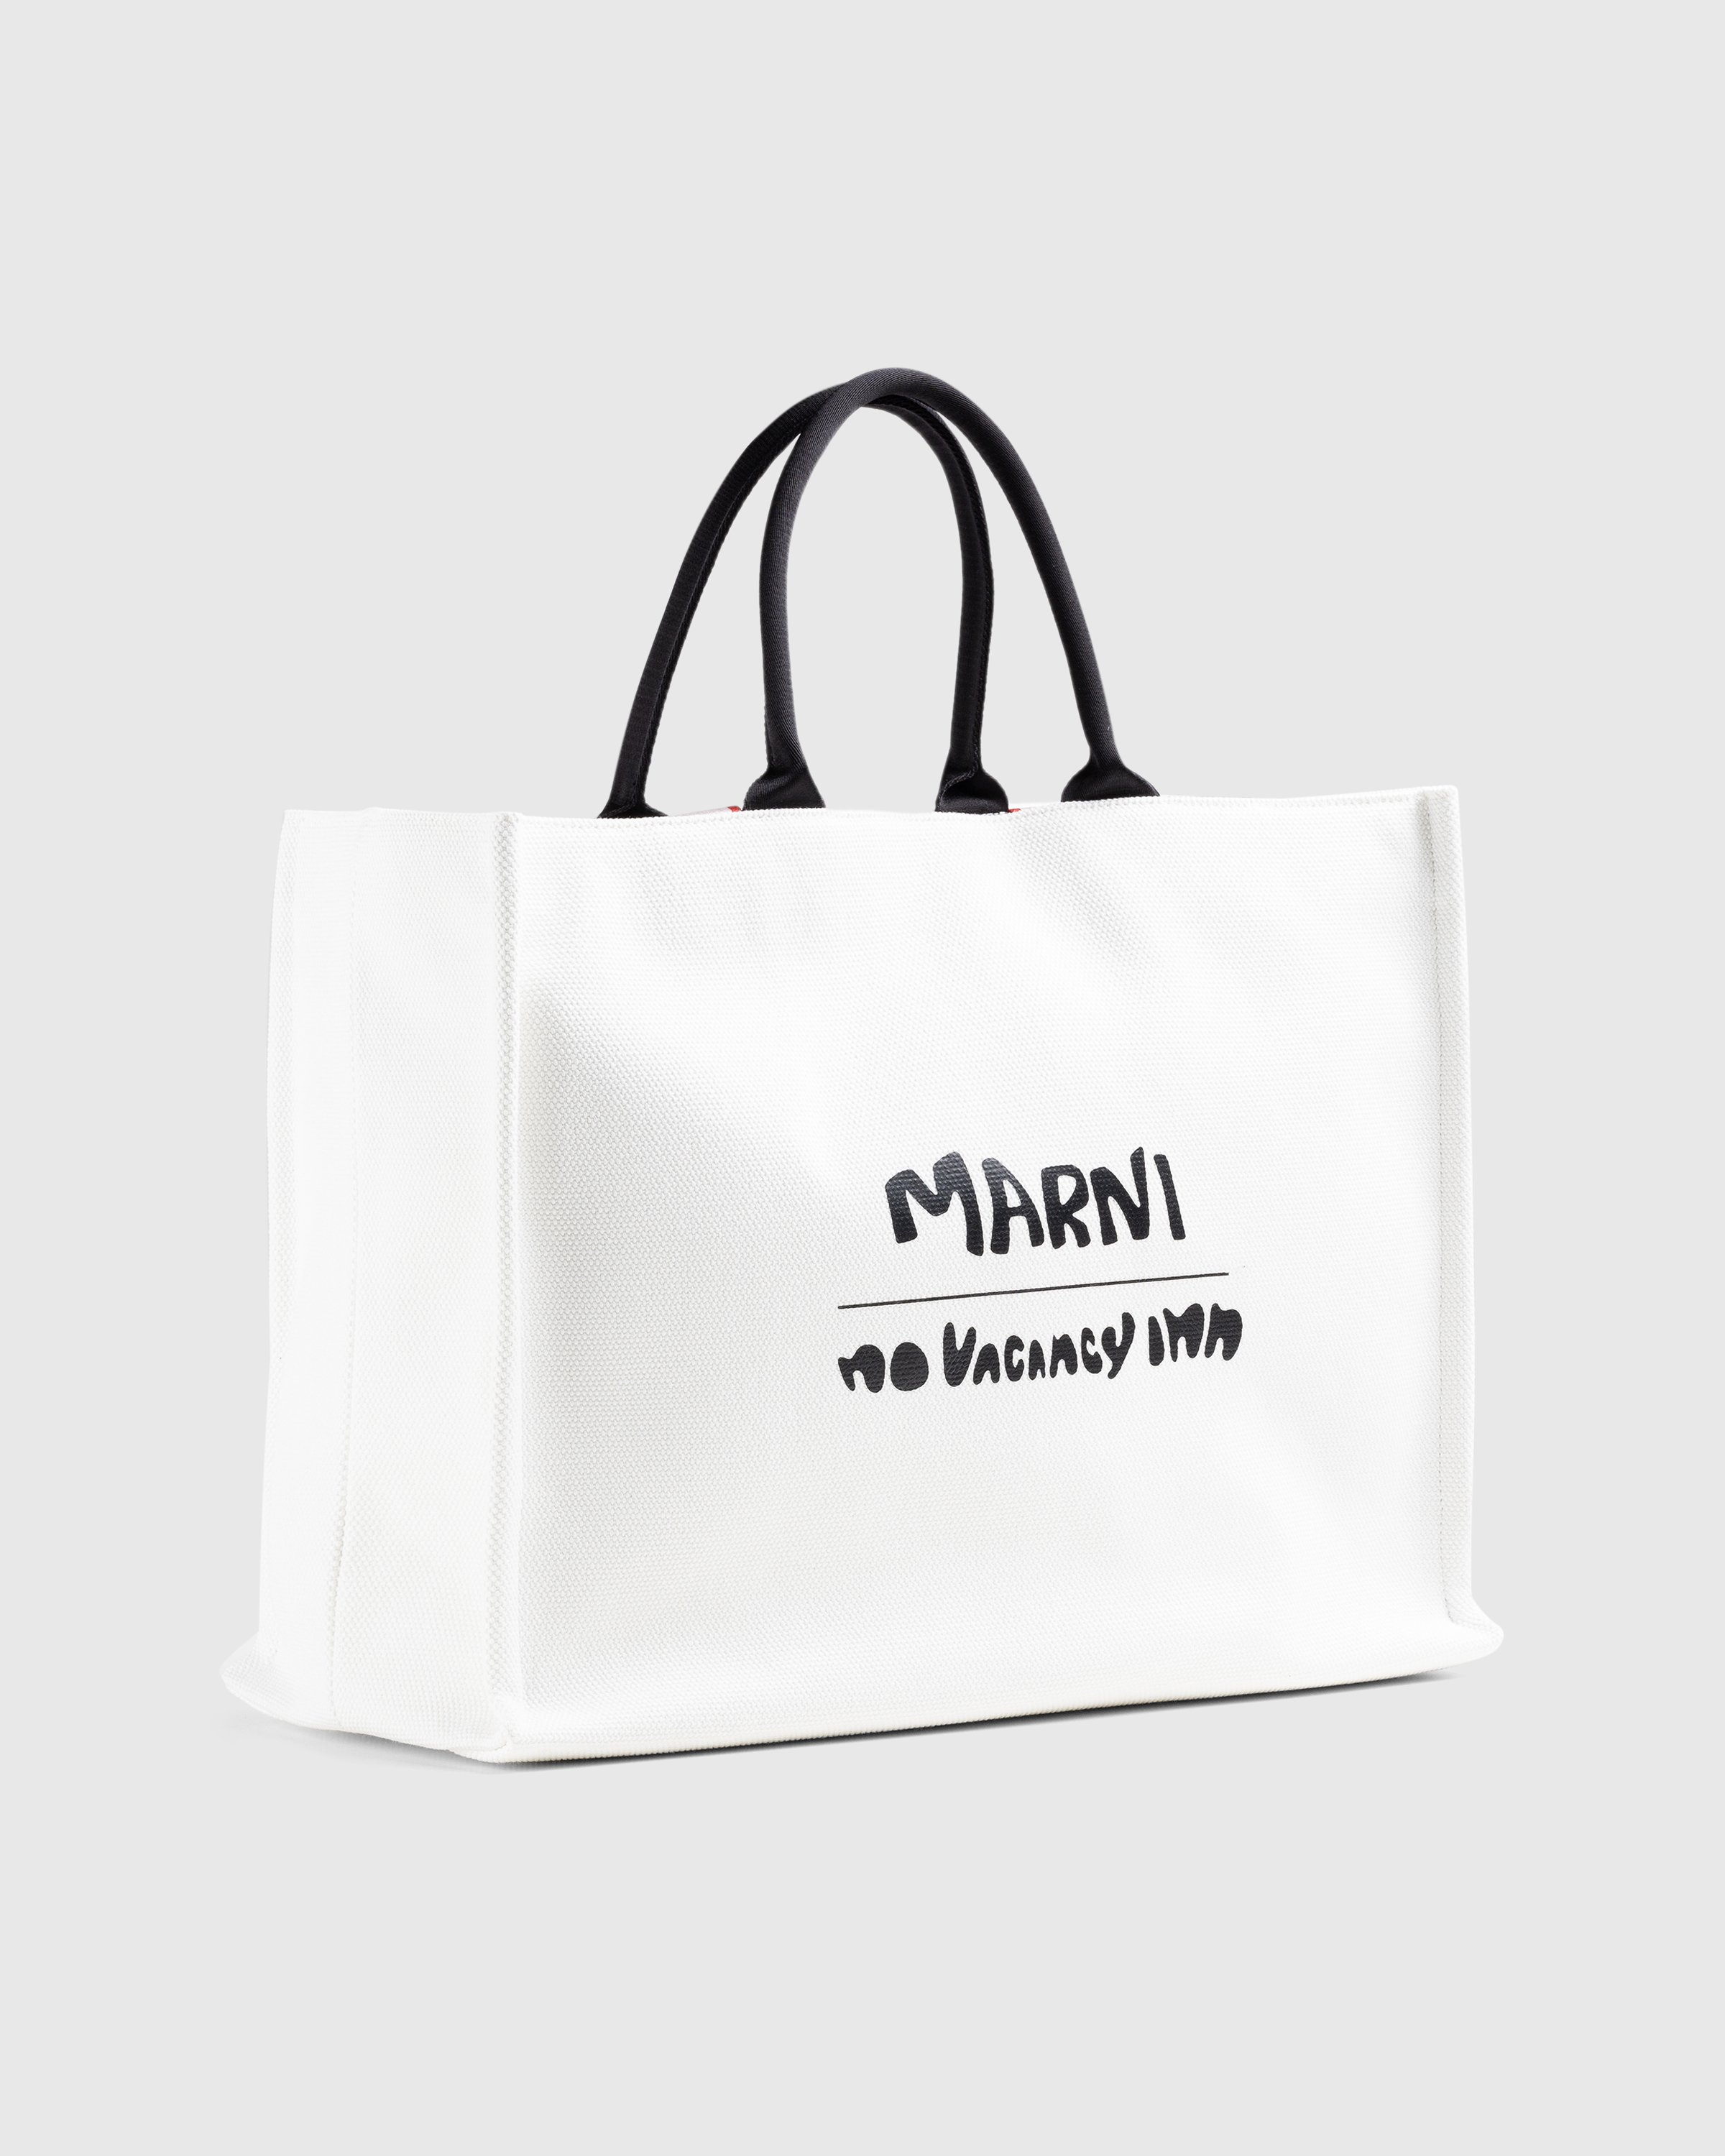 Marni x No Vacancy Inn - Bey Tote Bag Shell/Black - Accessories - White - Image 3